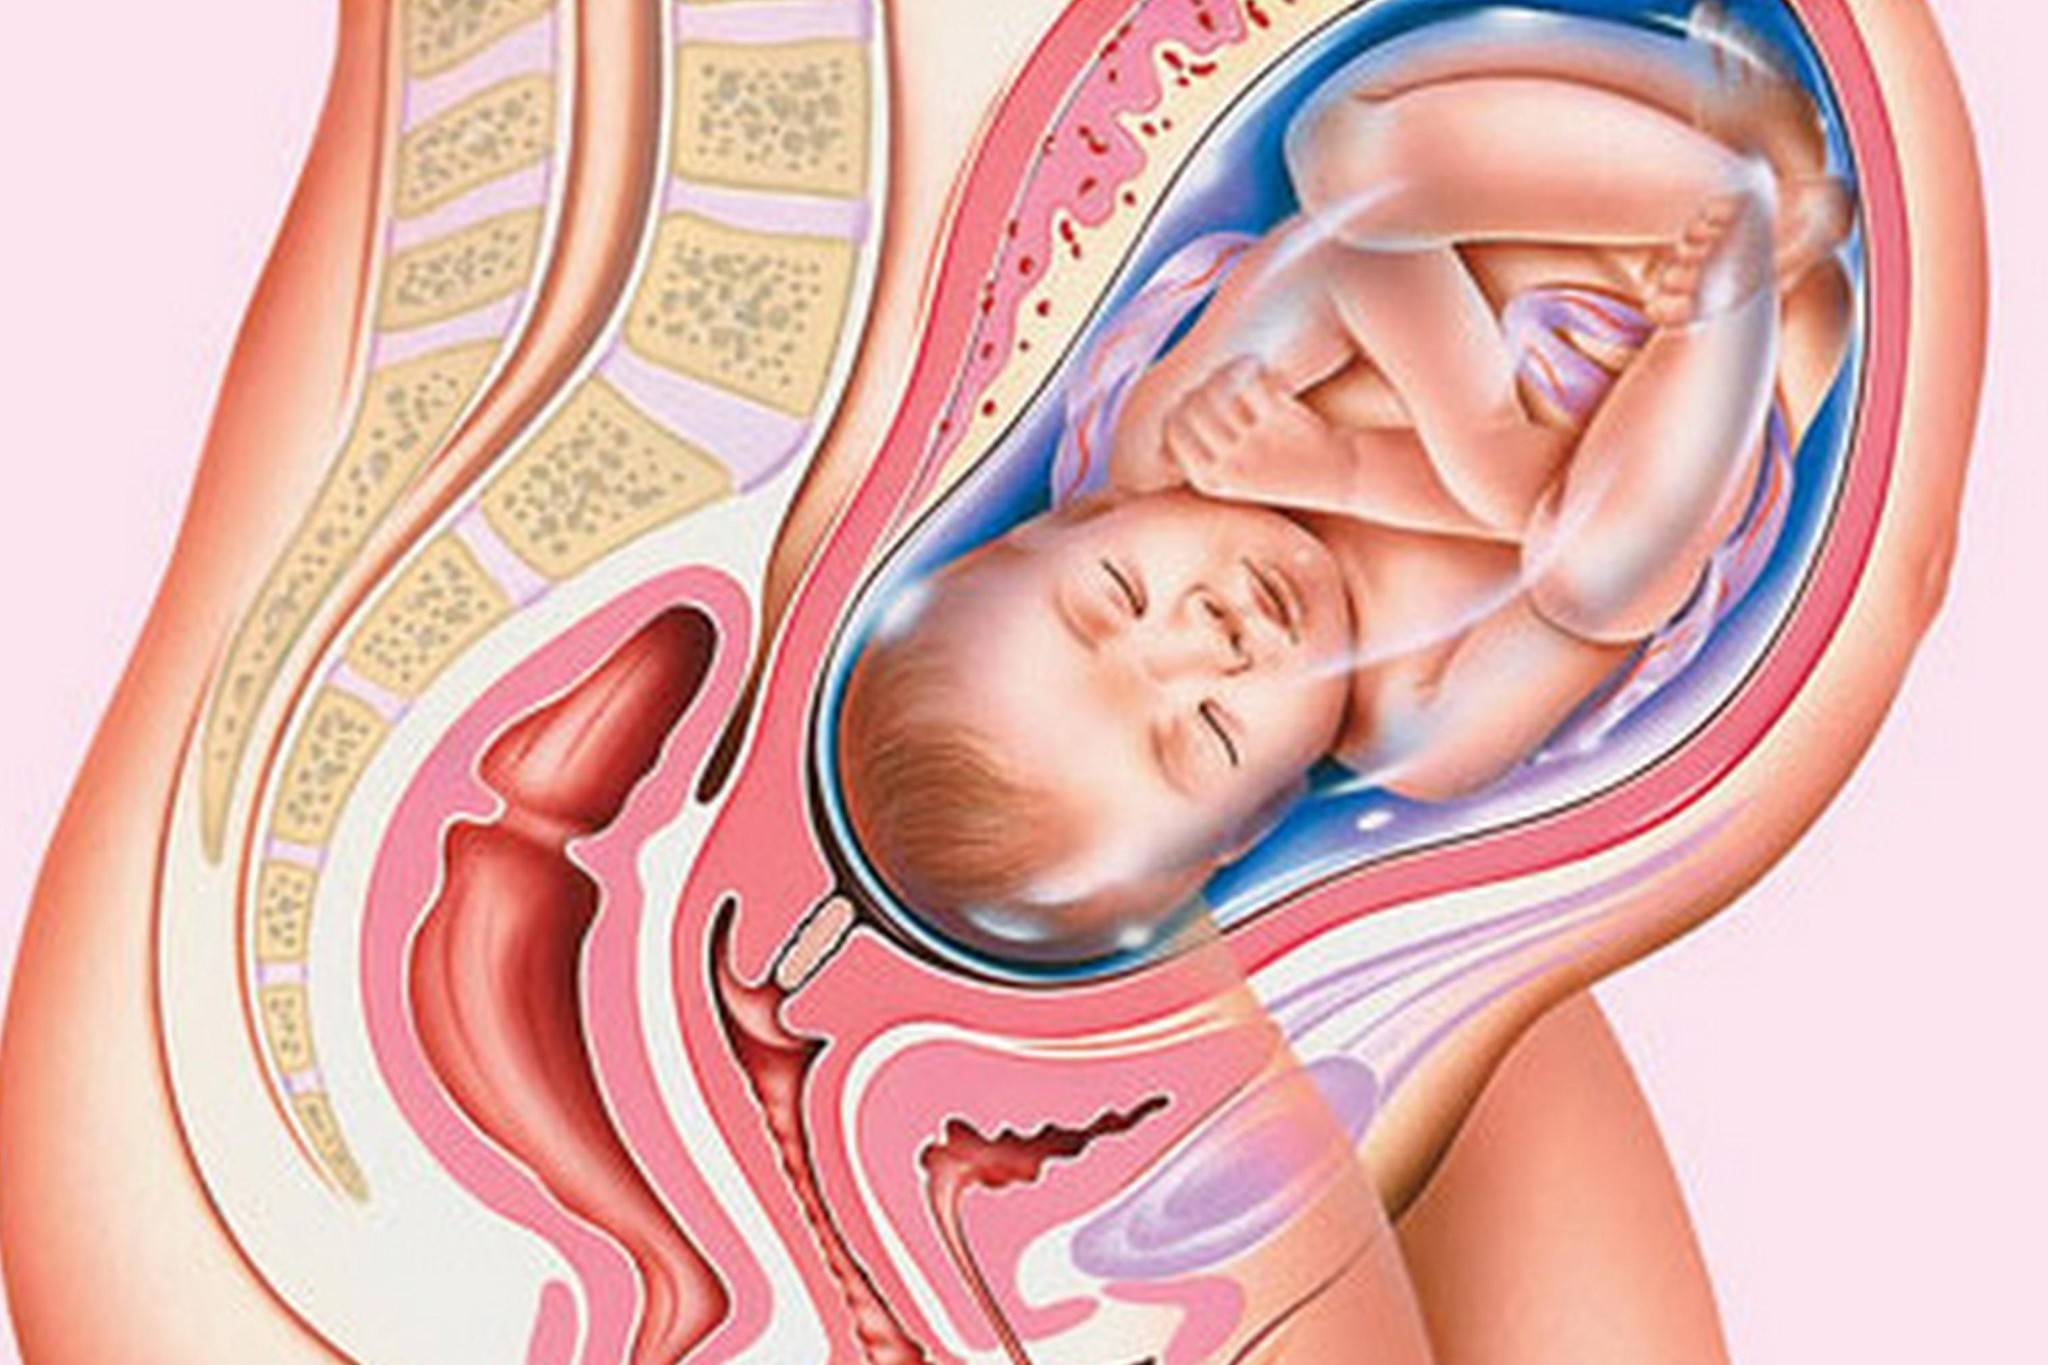 оргазм и гипертонус матки при беременности фото 68